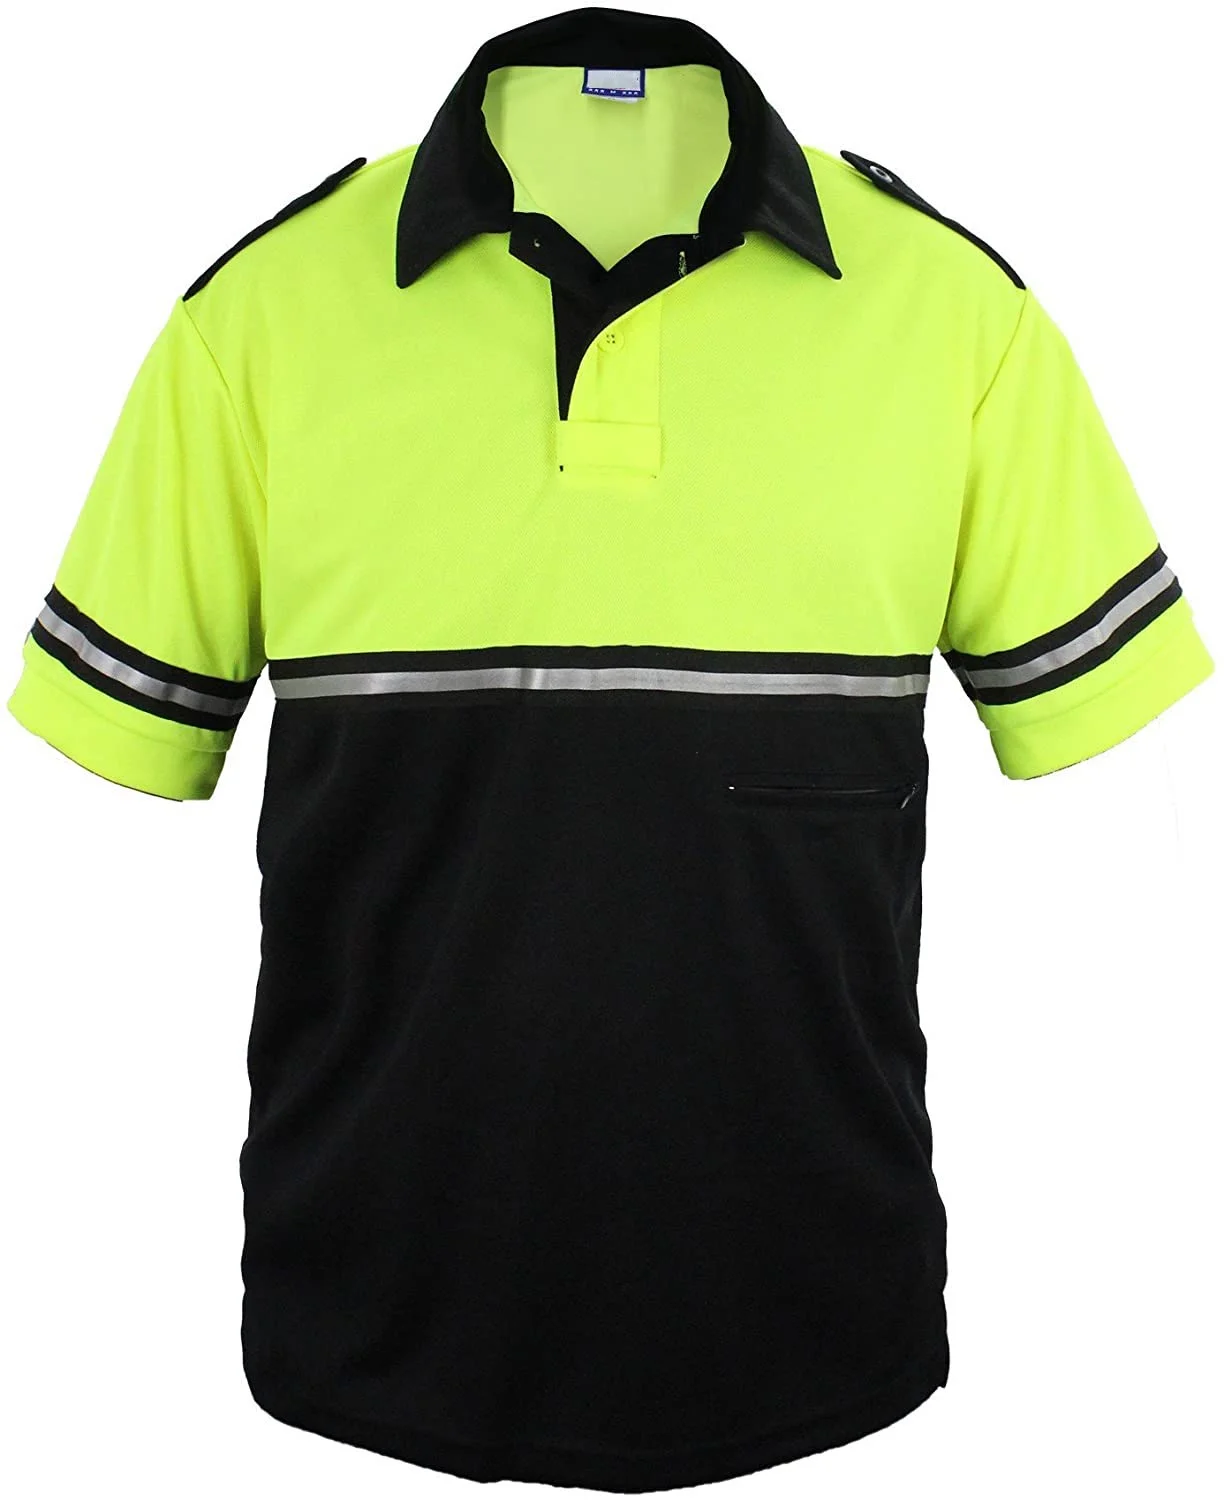 Two Tone Bike Patrol Shirt With Reflective Stripes And Zipper Pocket